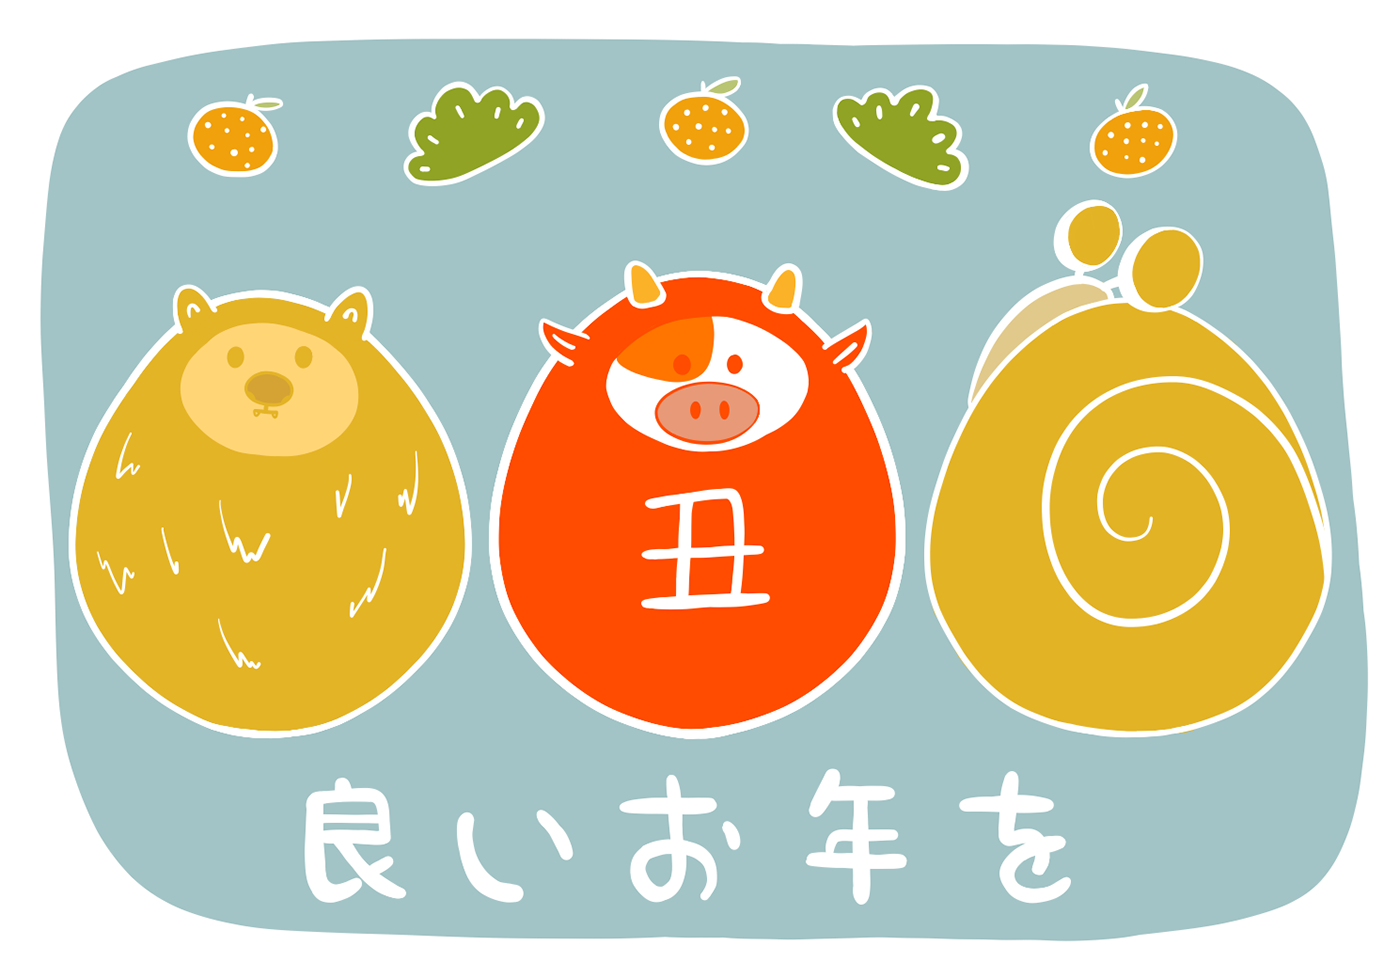 Hedgehog season ハリネズミ 季節 japan animal snail カタツムリ